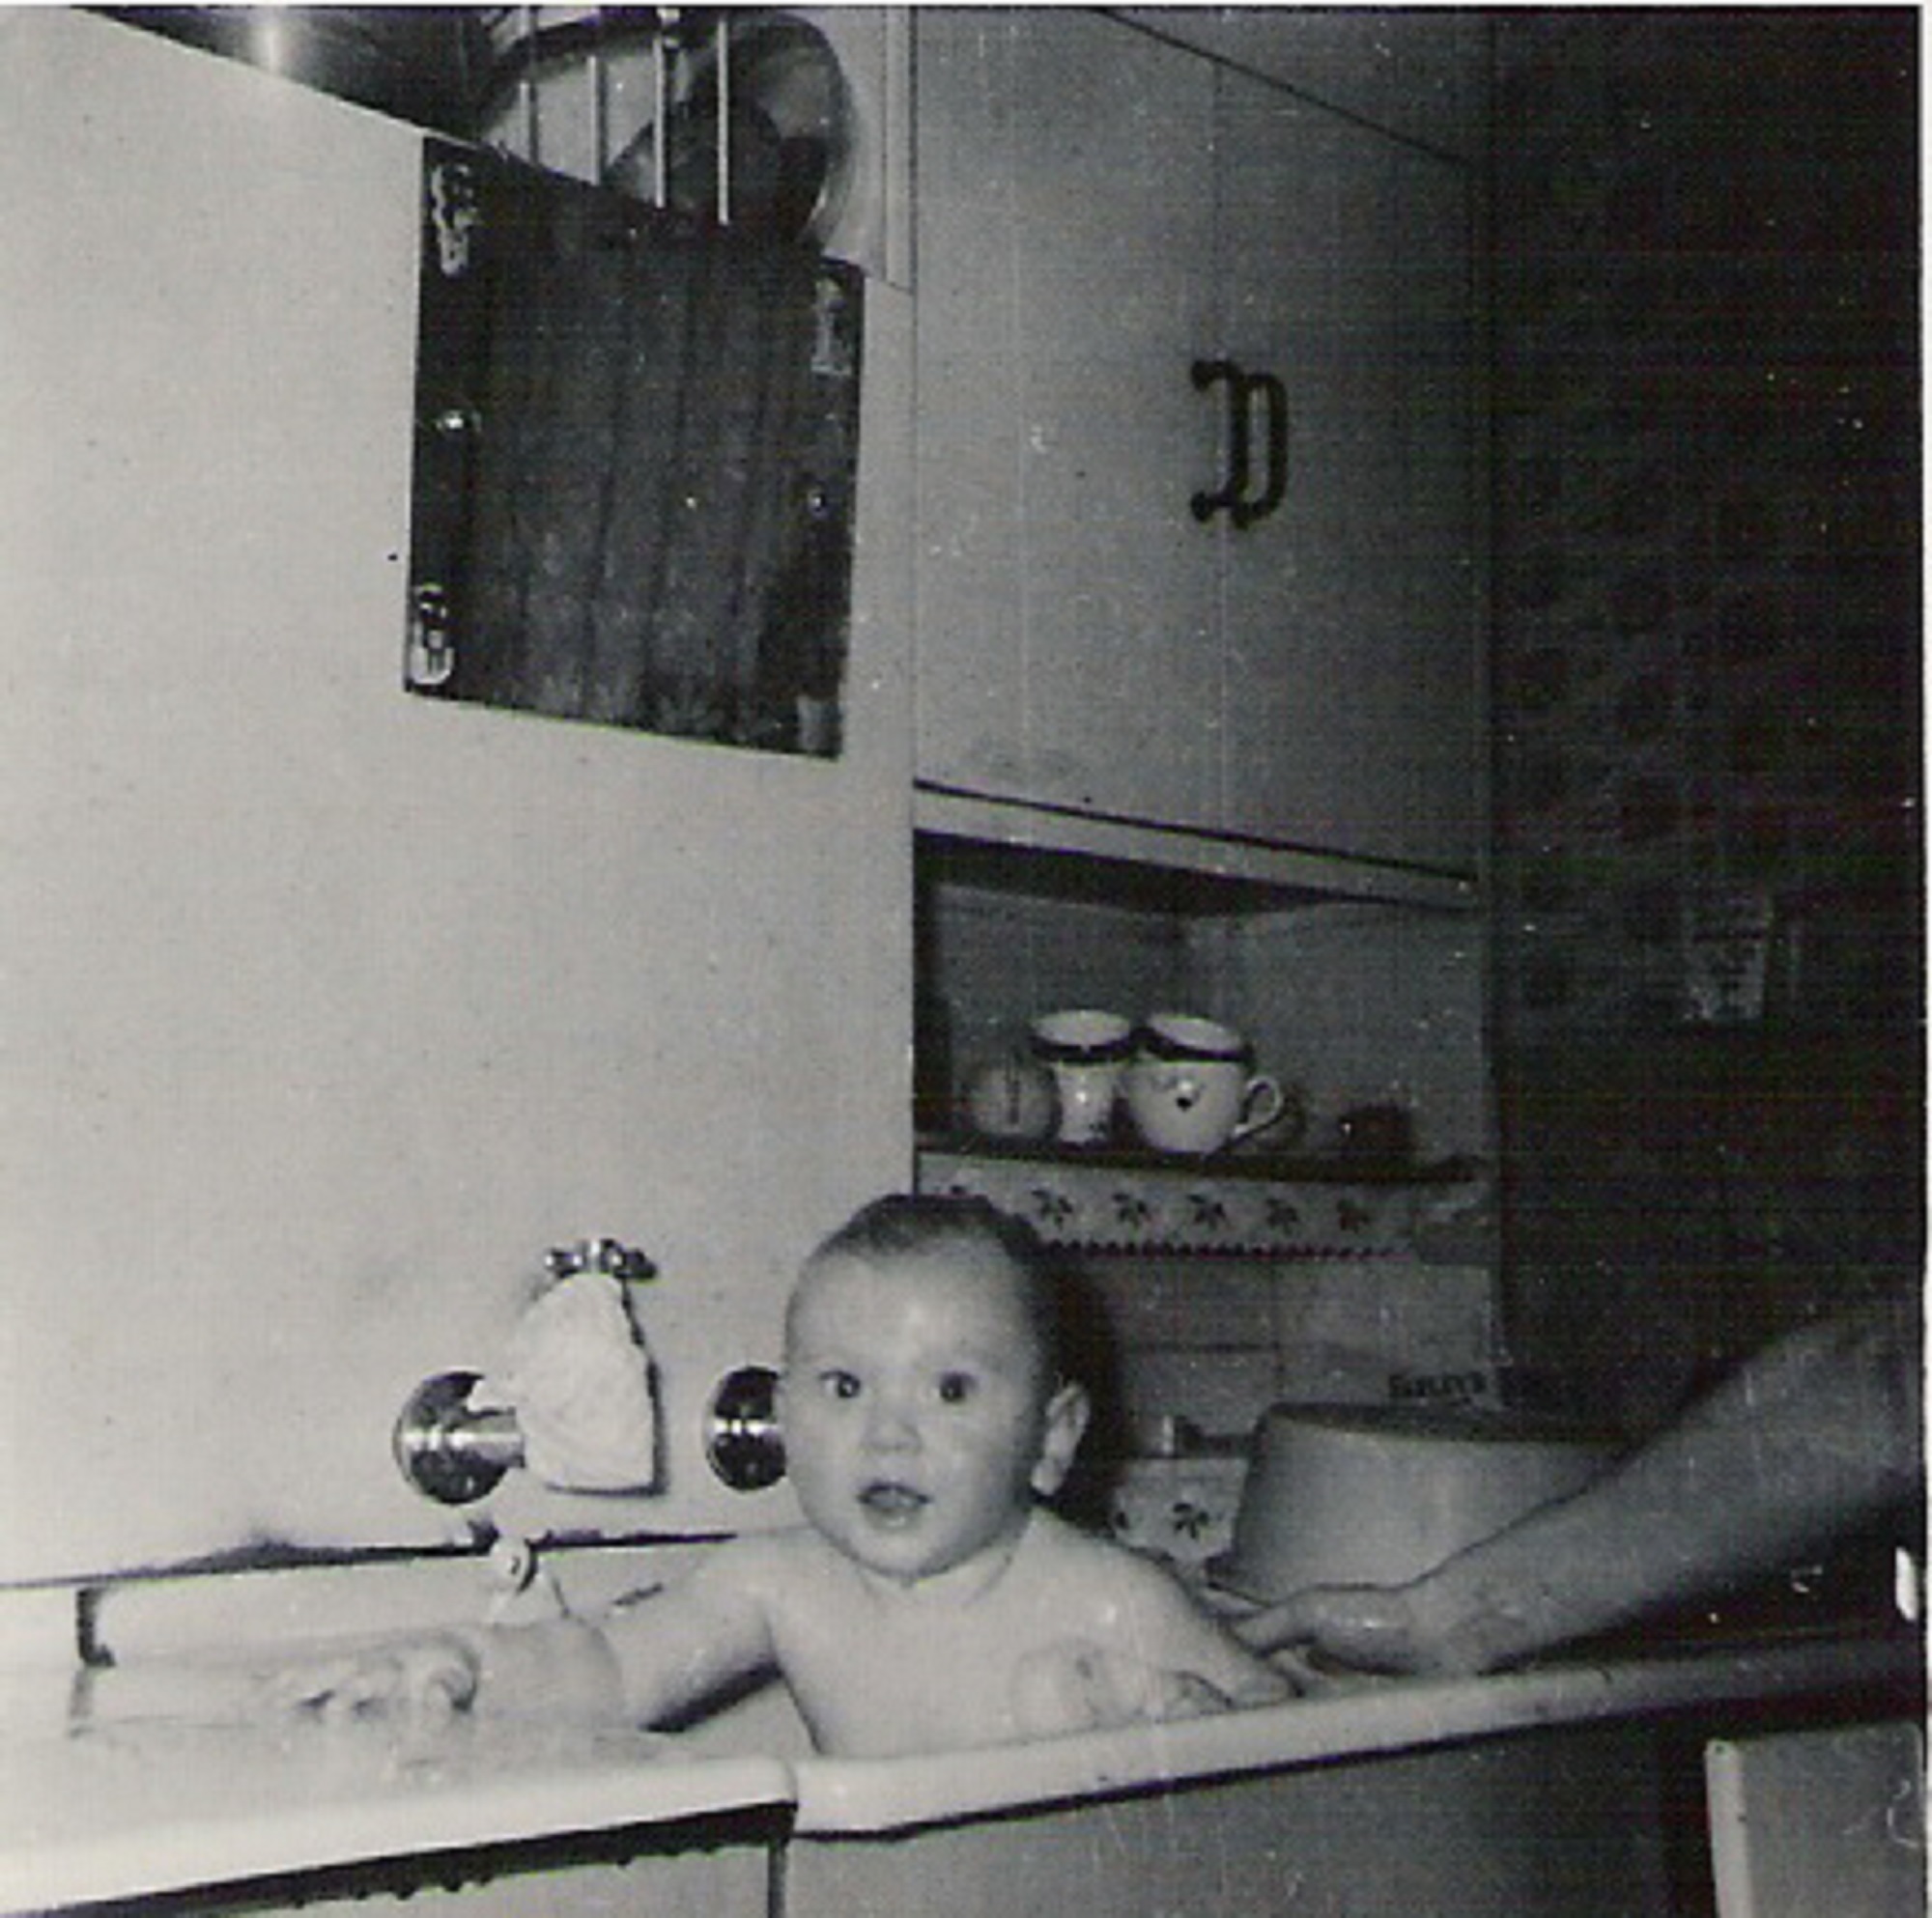 Graham having a baby bath in sink, 849 Ripple Road